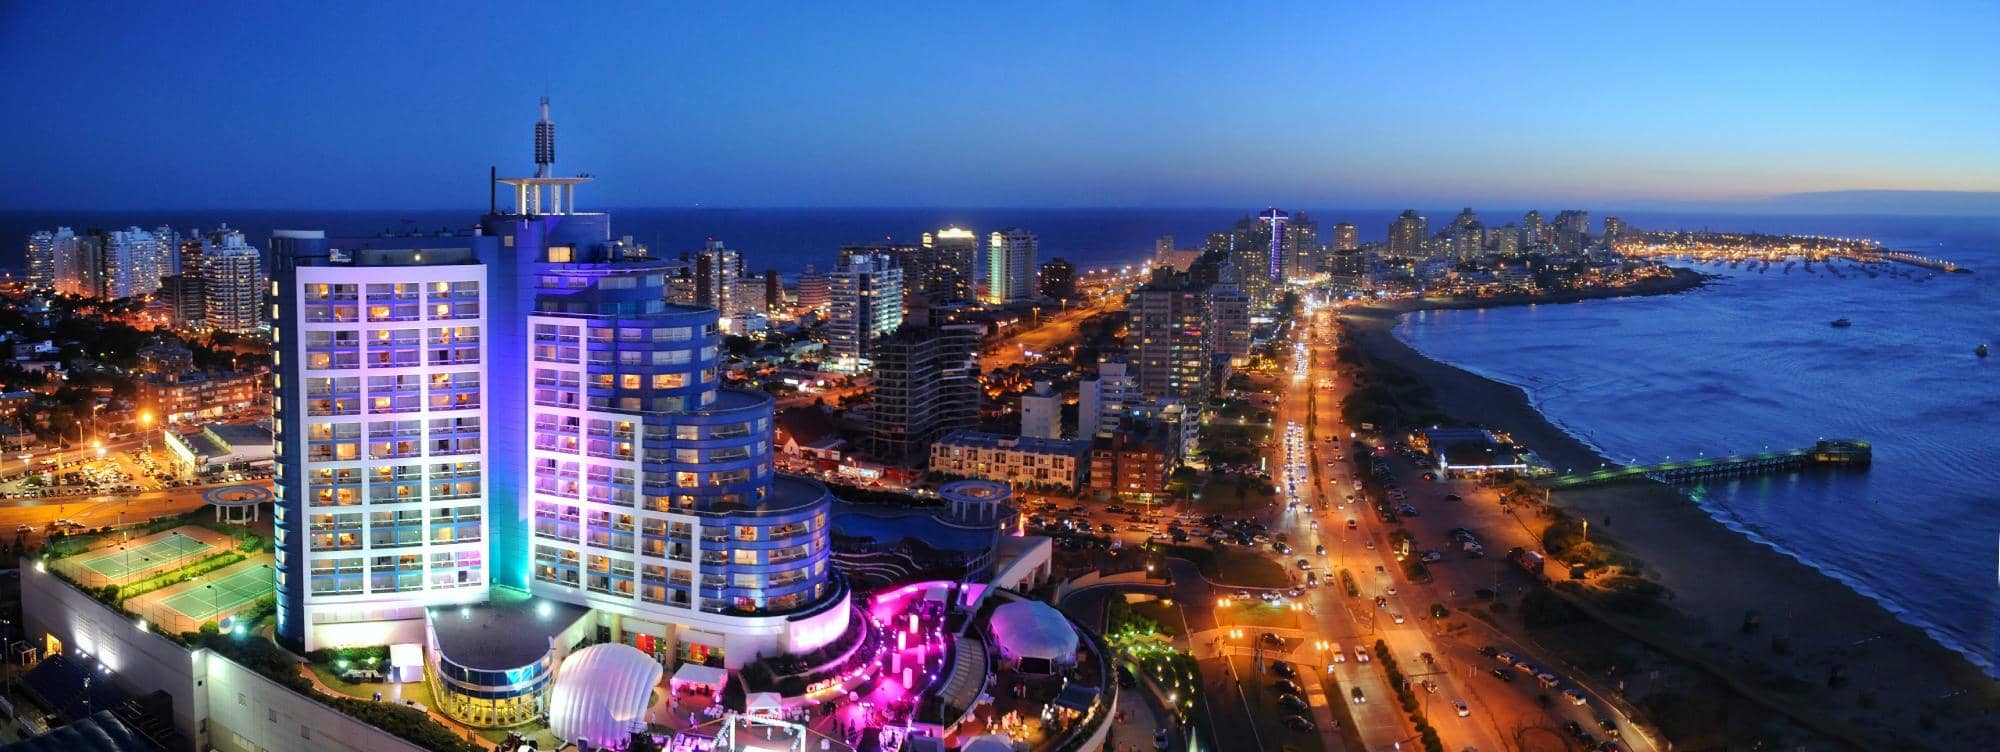 Aluguel de carro em Montevidéu: Punta del Este - Uruguai